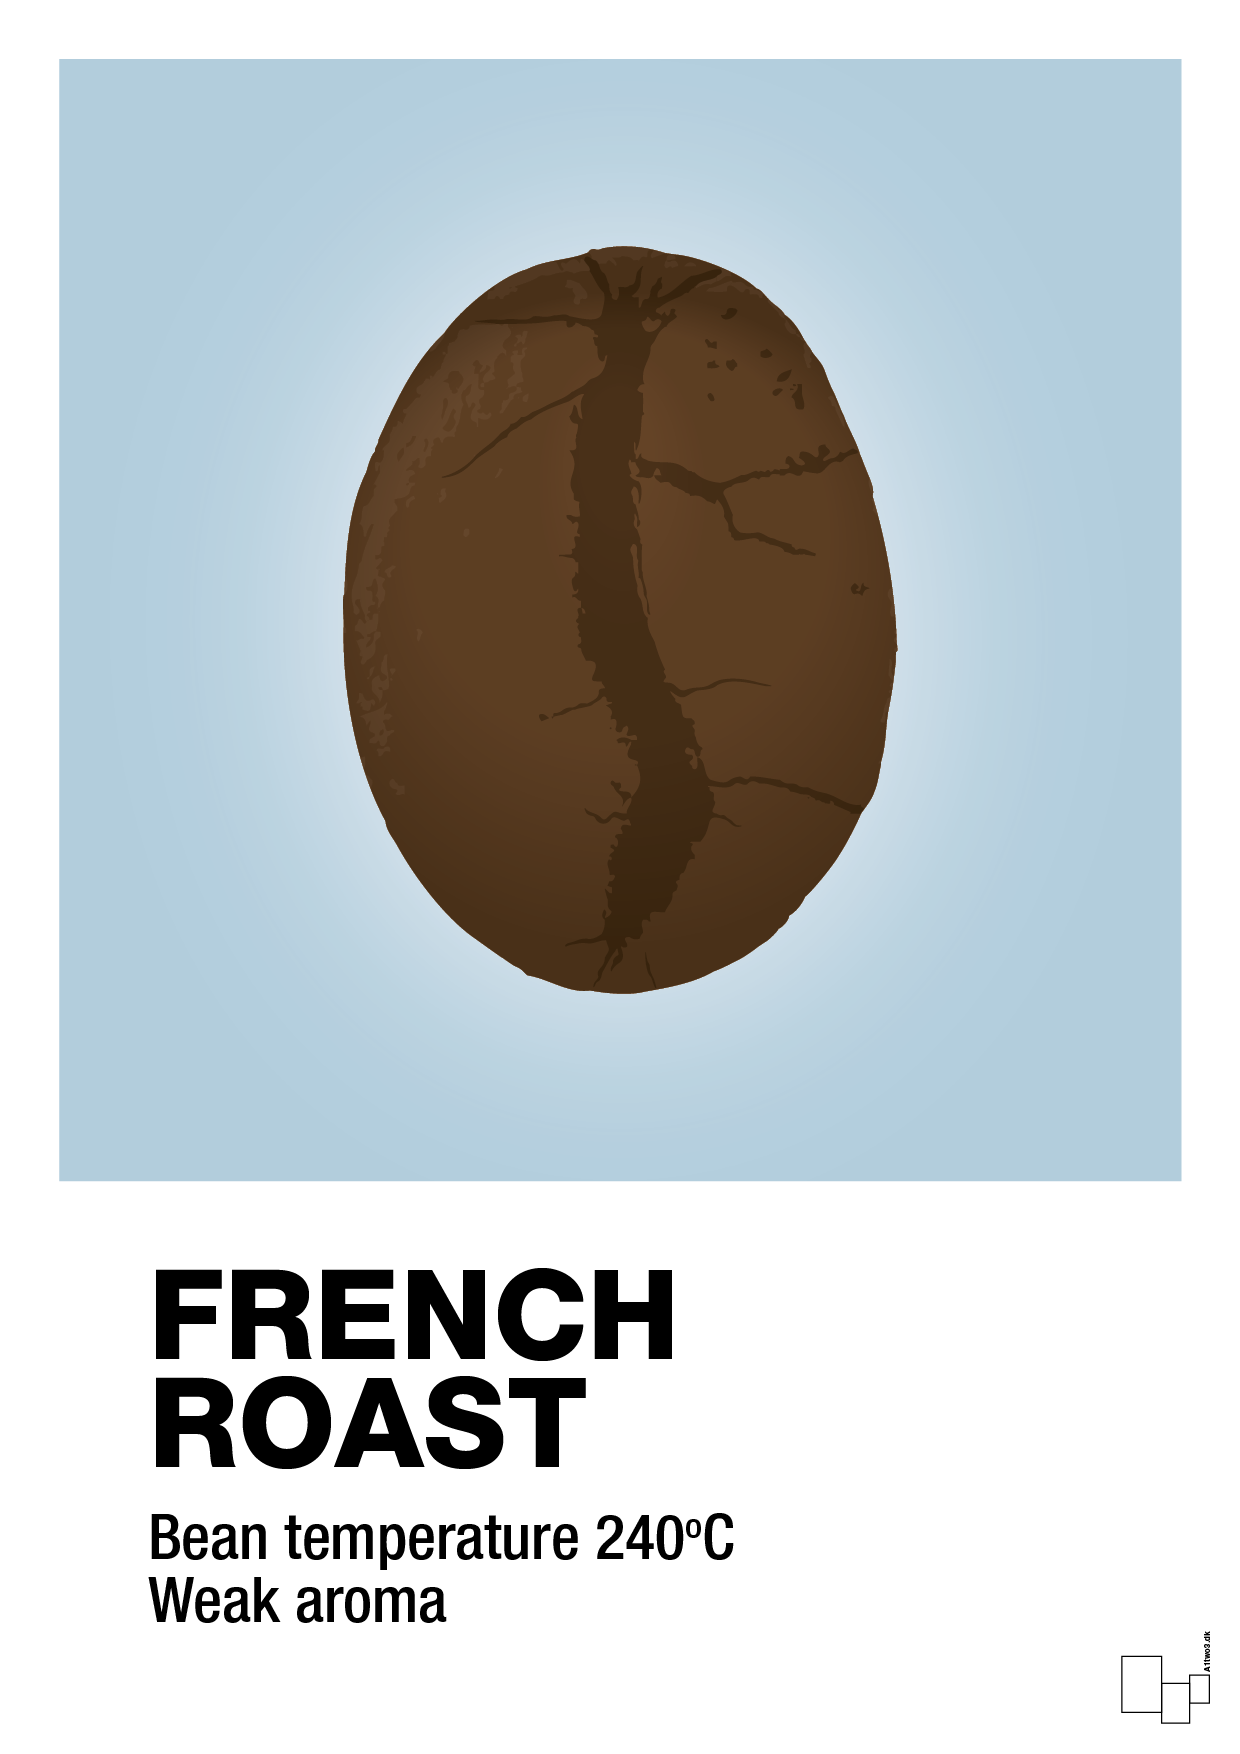 french roast - Plakat med Mad & Drikke i Heavenly Blue